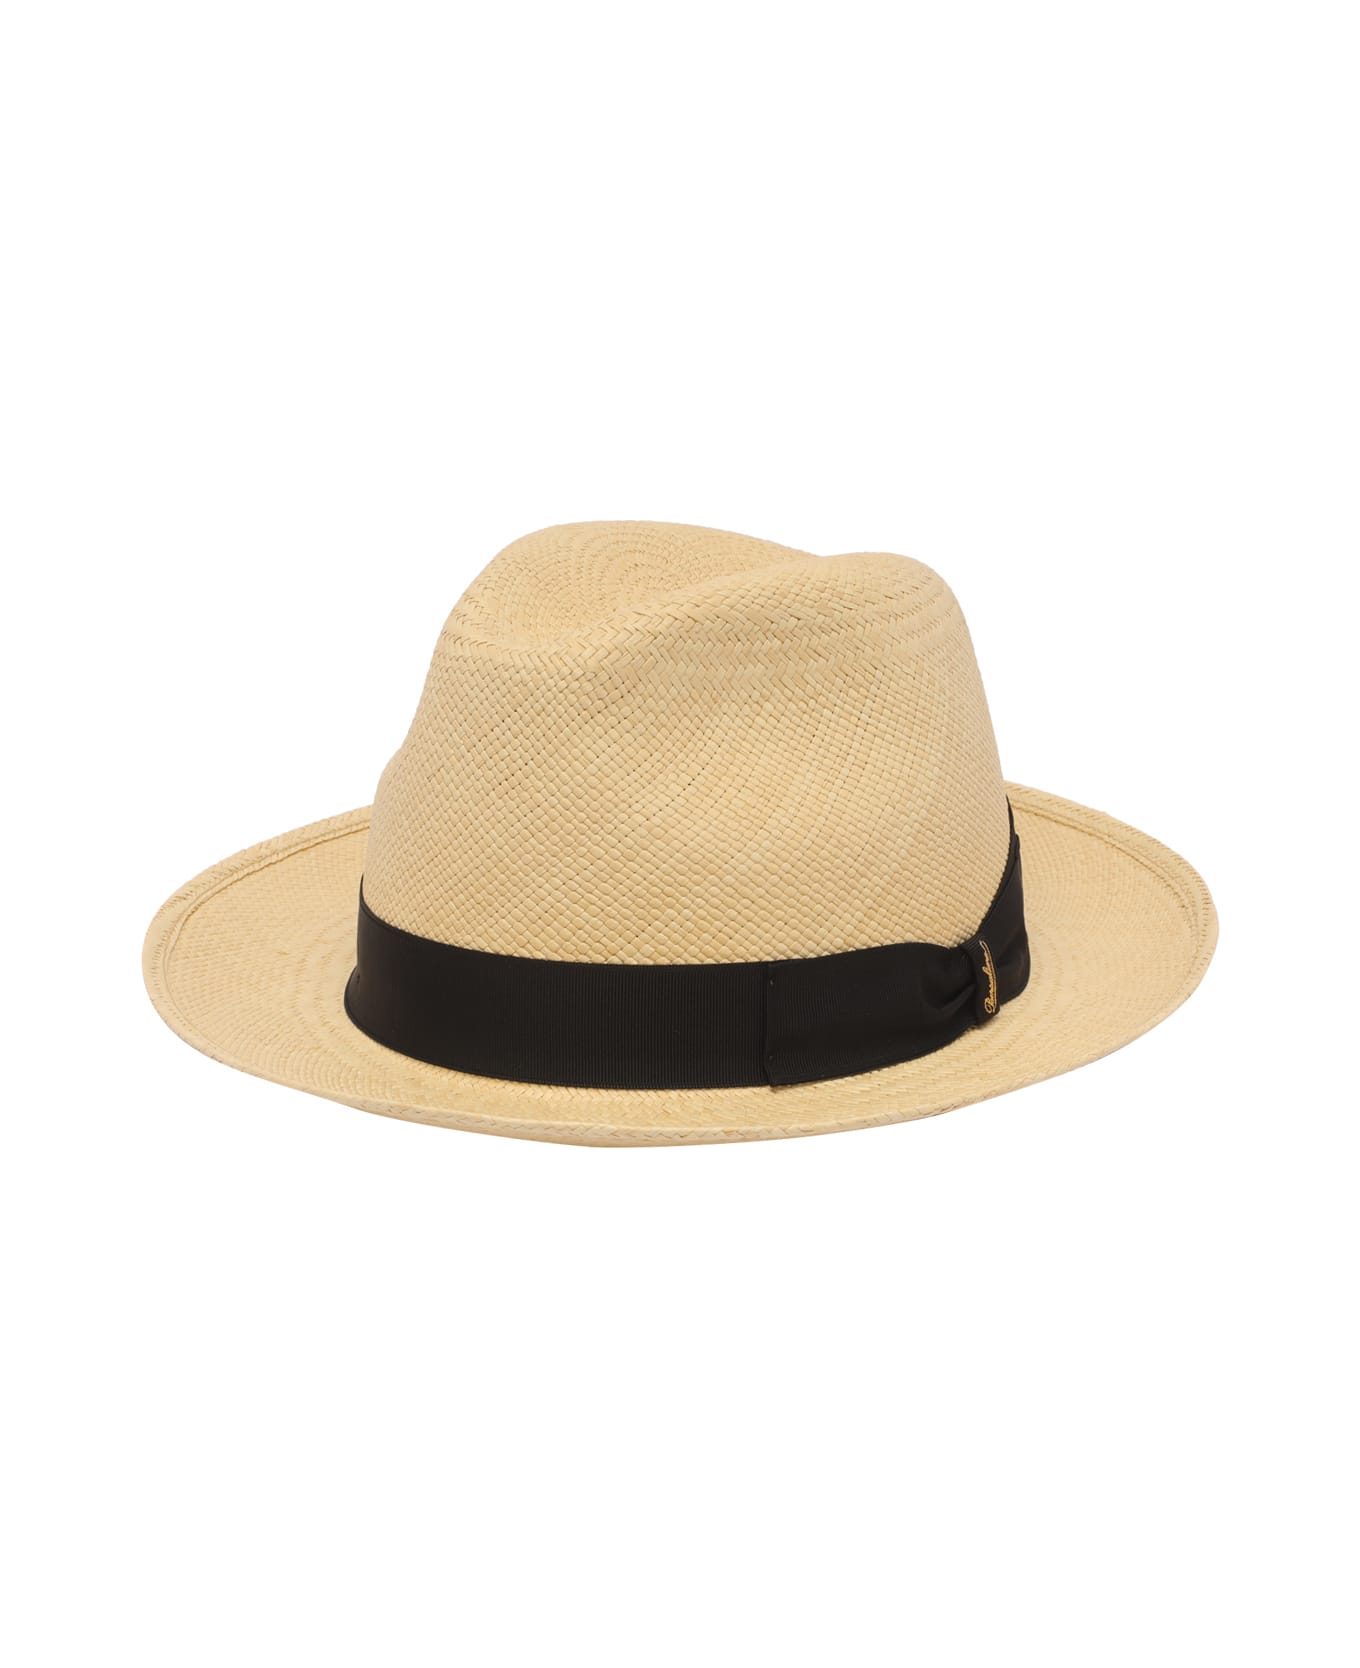 Borsalino Quito Panama Bucket Hat - Natural